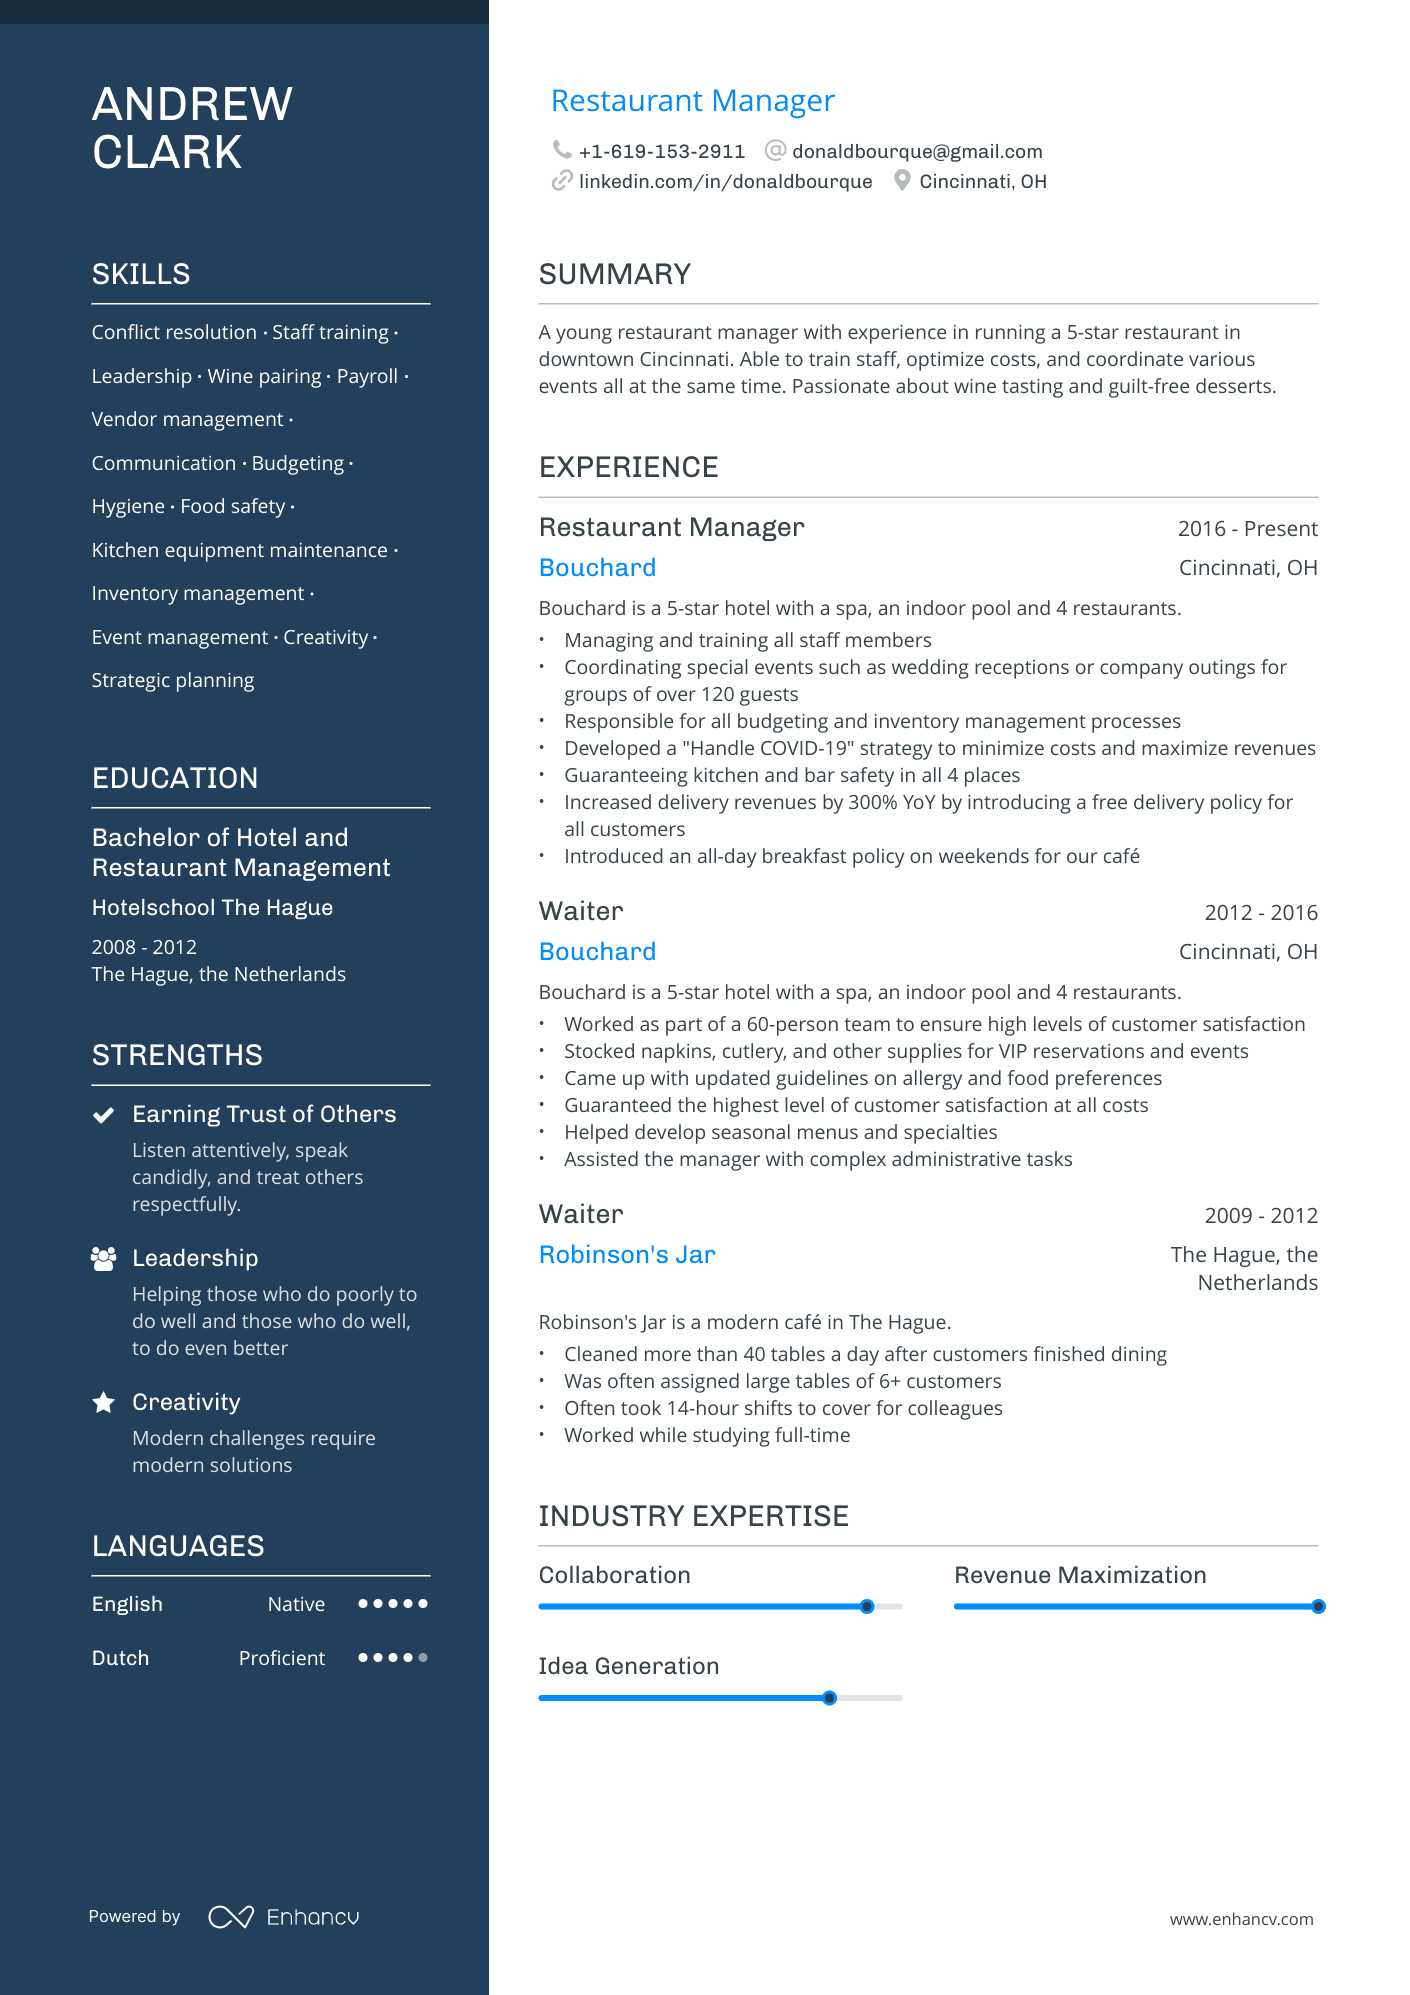 best resume format for general manager